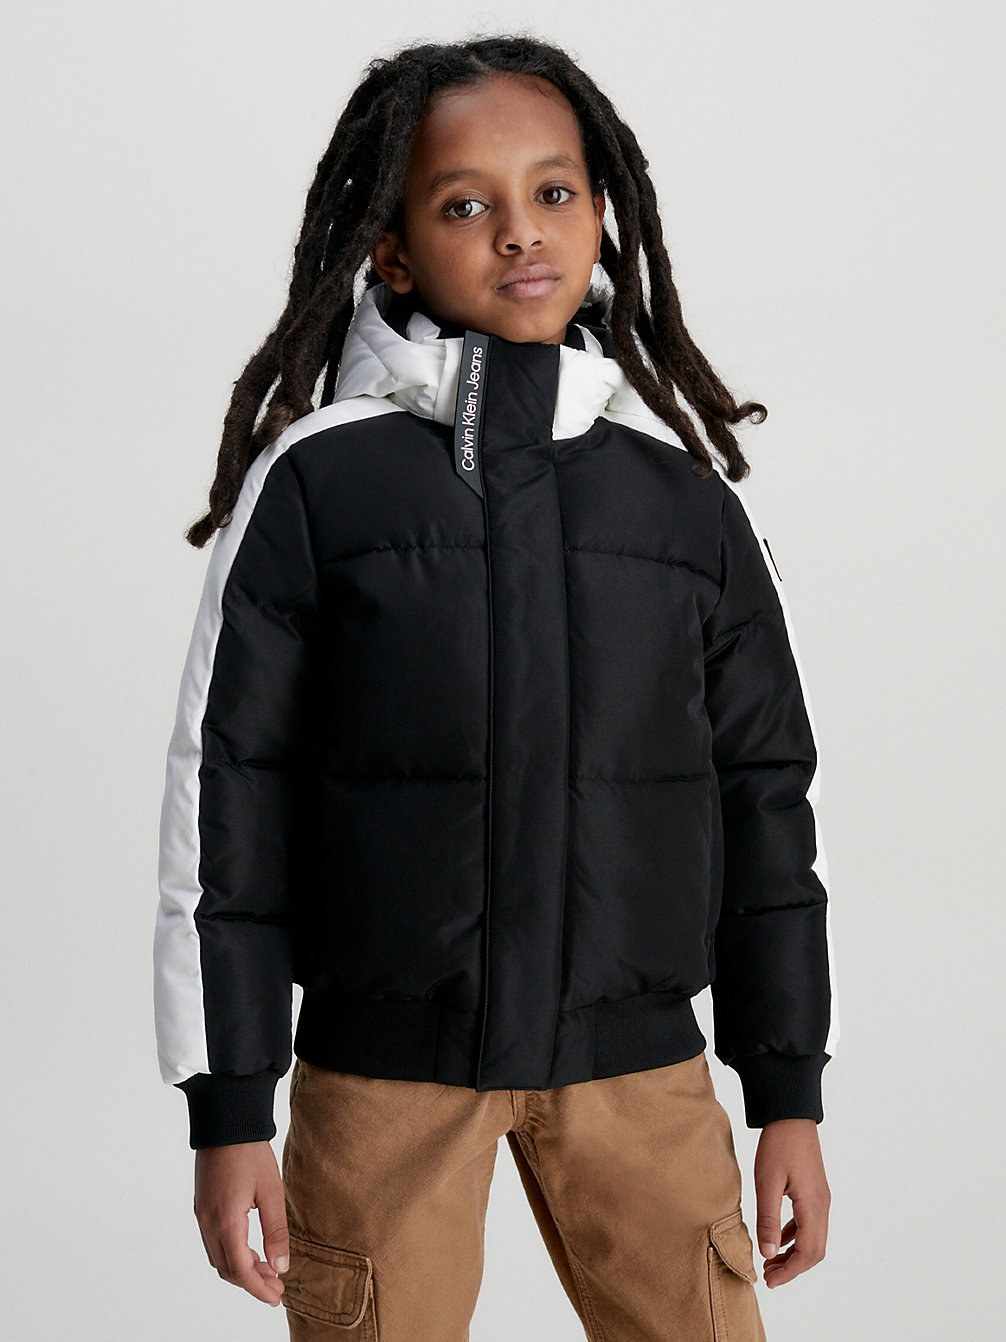 CK BLACK/BRIGHT WHITE Colourblock Puffer Jacket undefined boys Calvin Klein